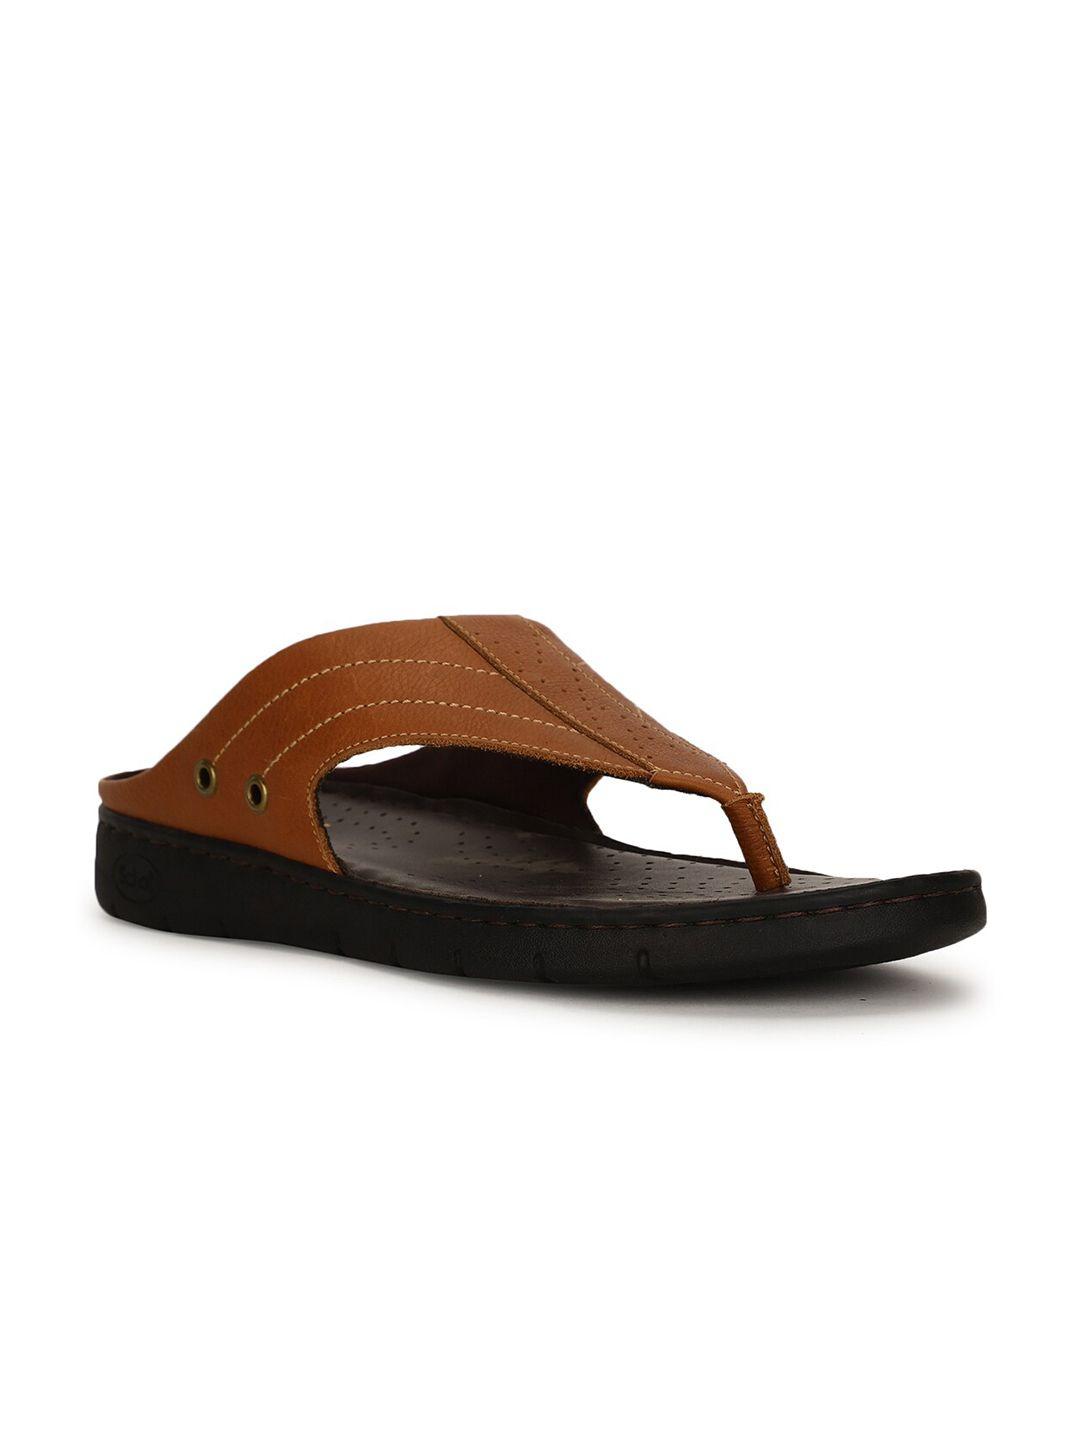 scholl-men-tan-&-black-leather-comfort-sandals